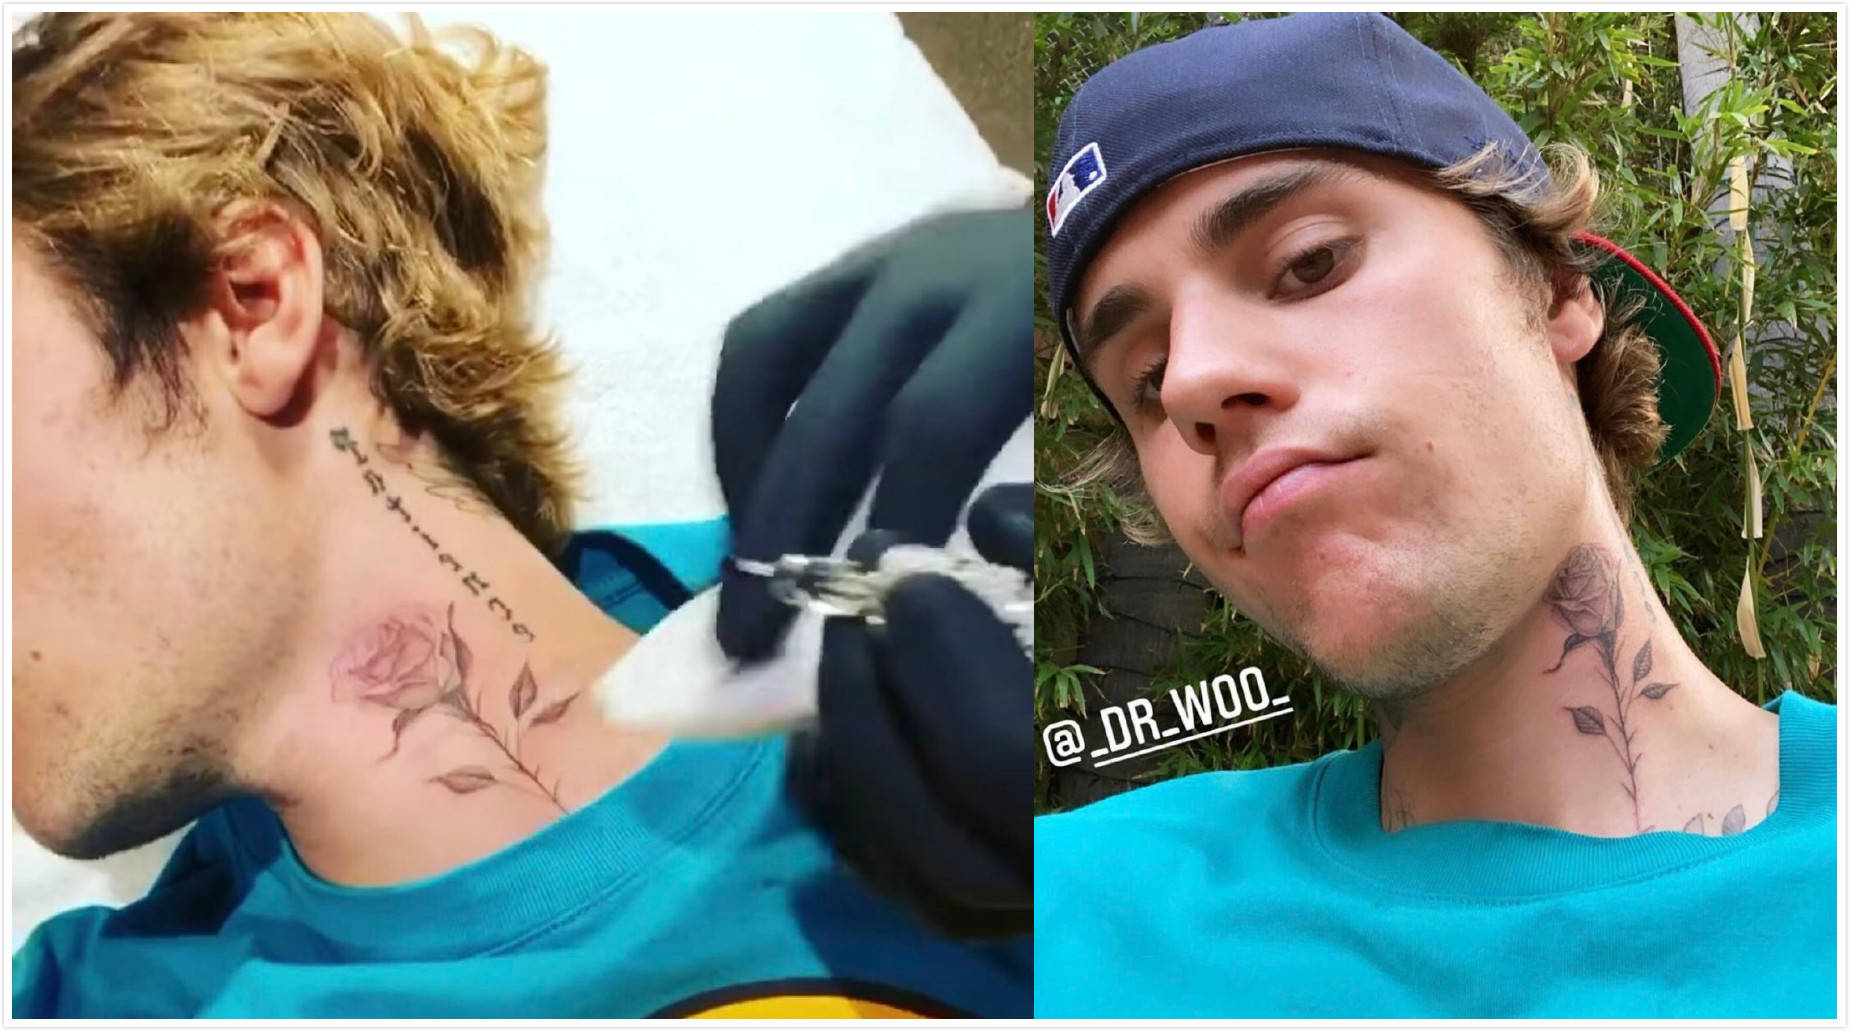 justinbieber脖子纹身图片